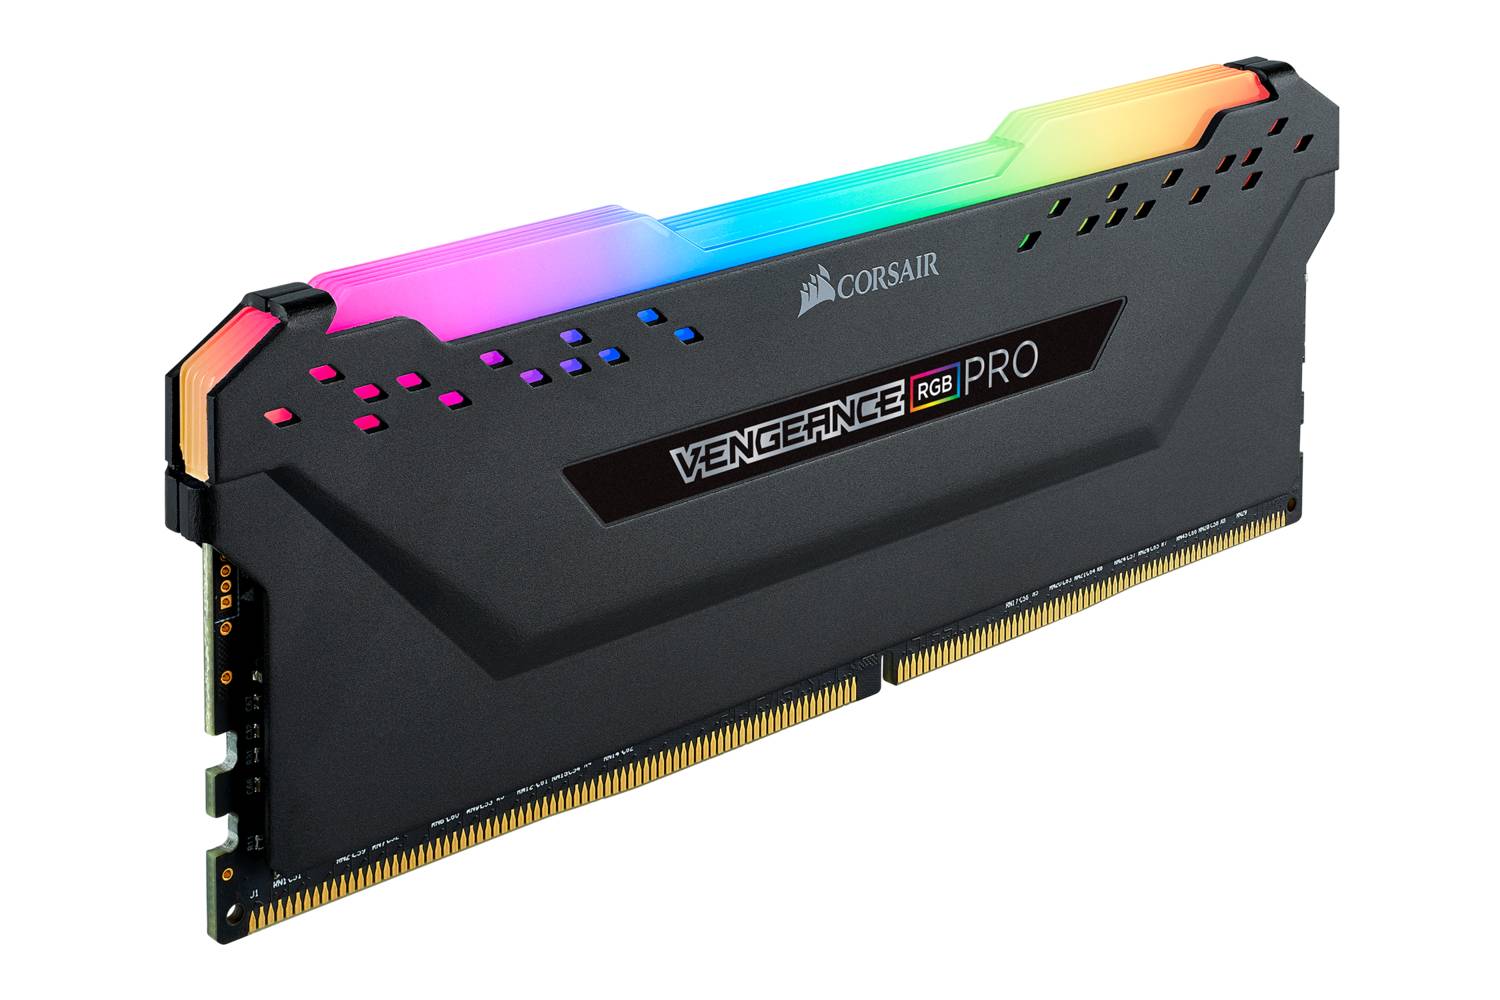 Corsair Vengeance RGB Pro 16GB (1 x 16GB) DDR4 DRAM 3000MHz C16 Memory Kit — Black